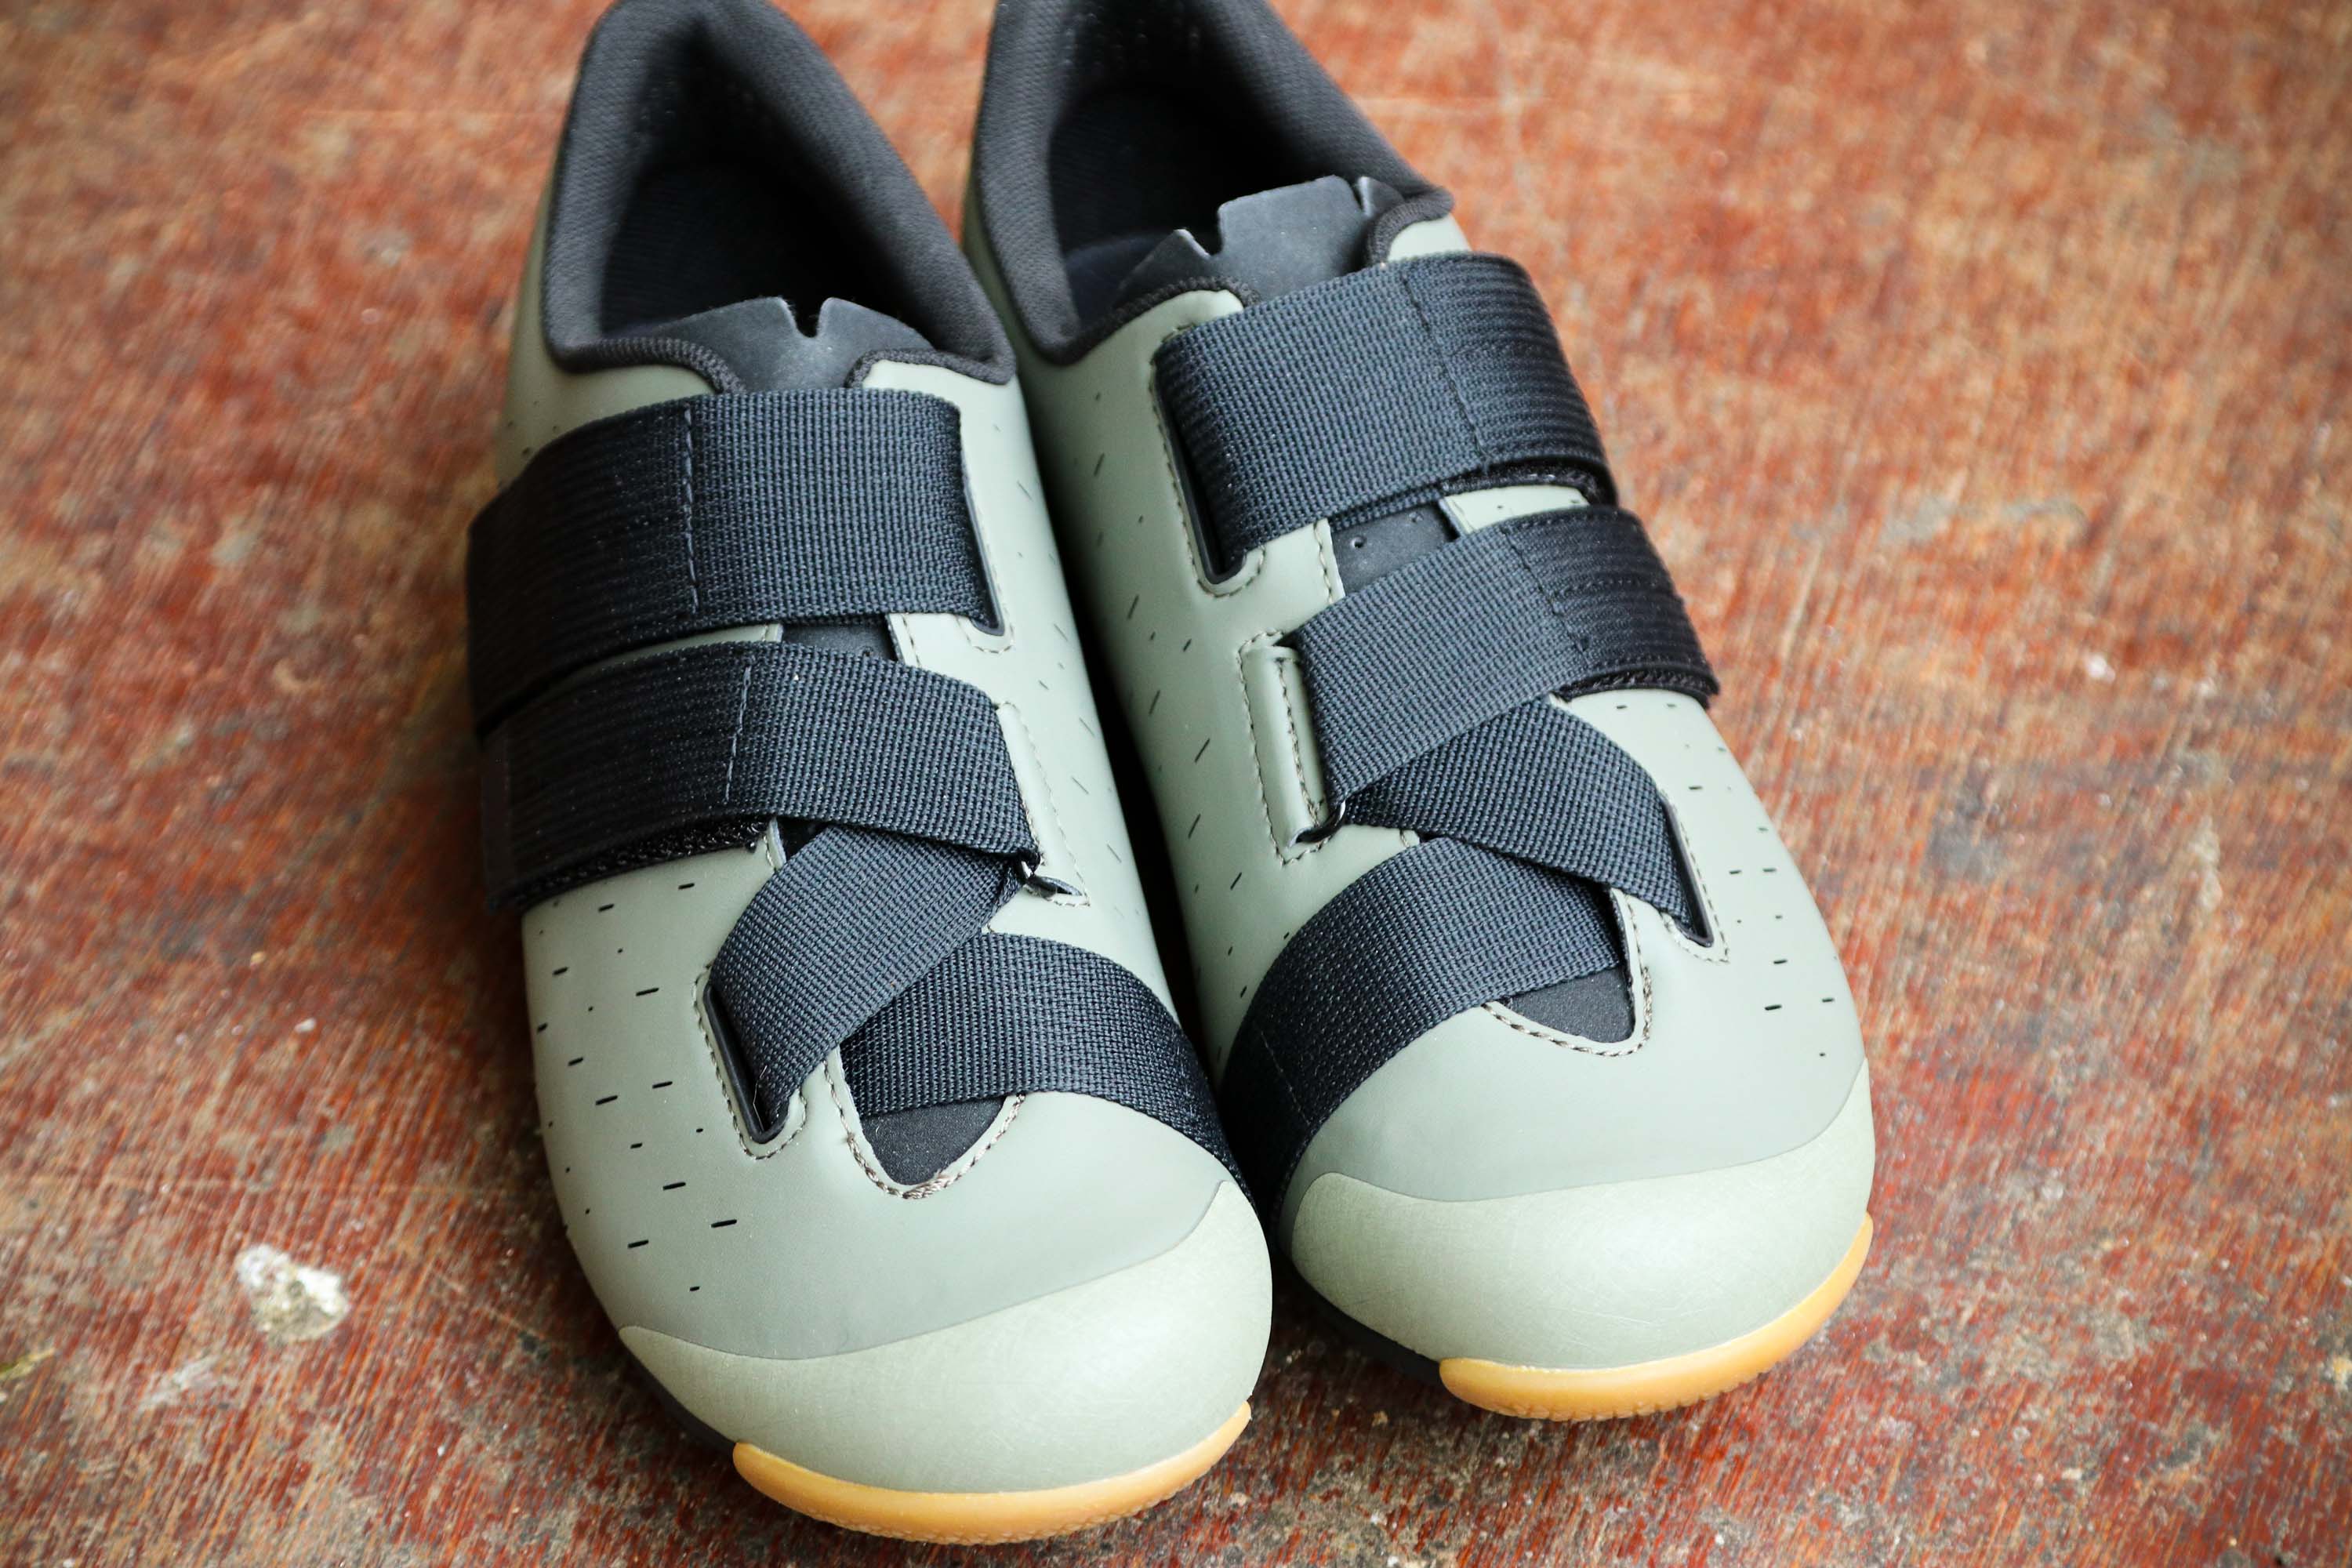 Review: Fizik Terra Powerstrap X4 shoes 